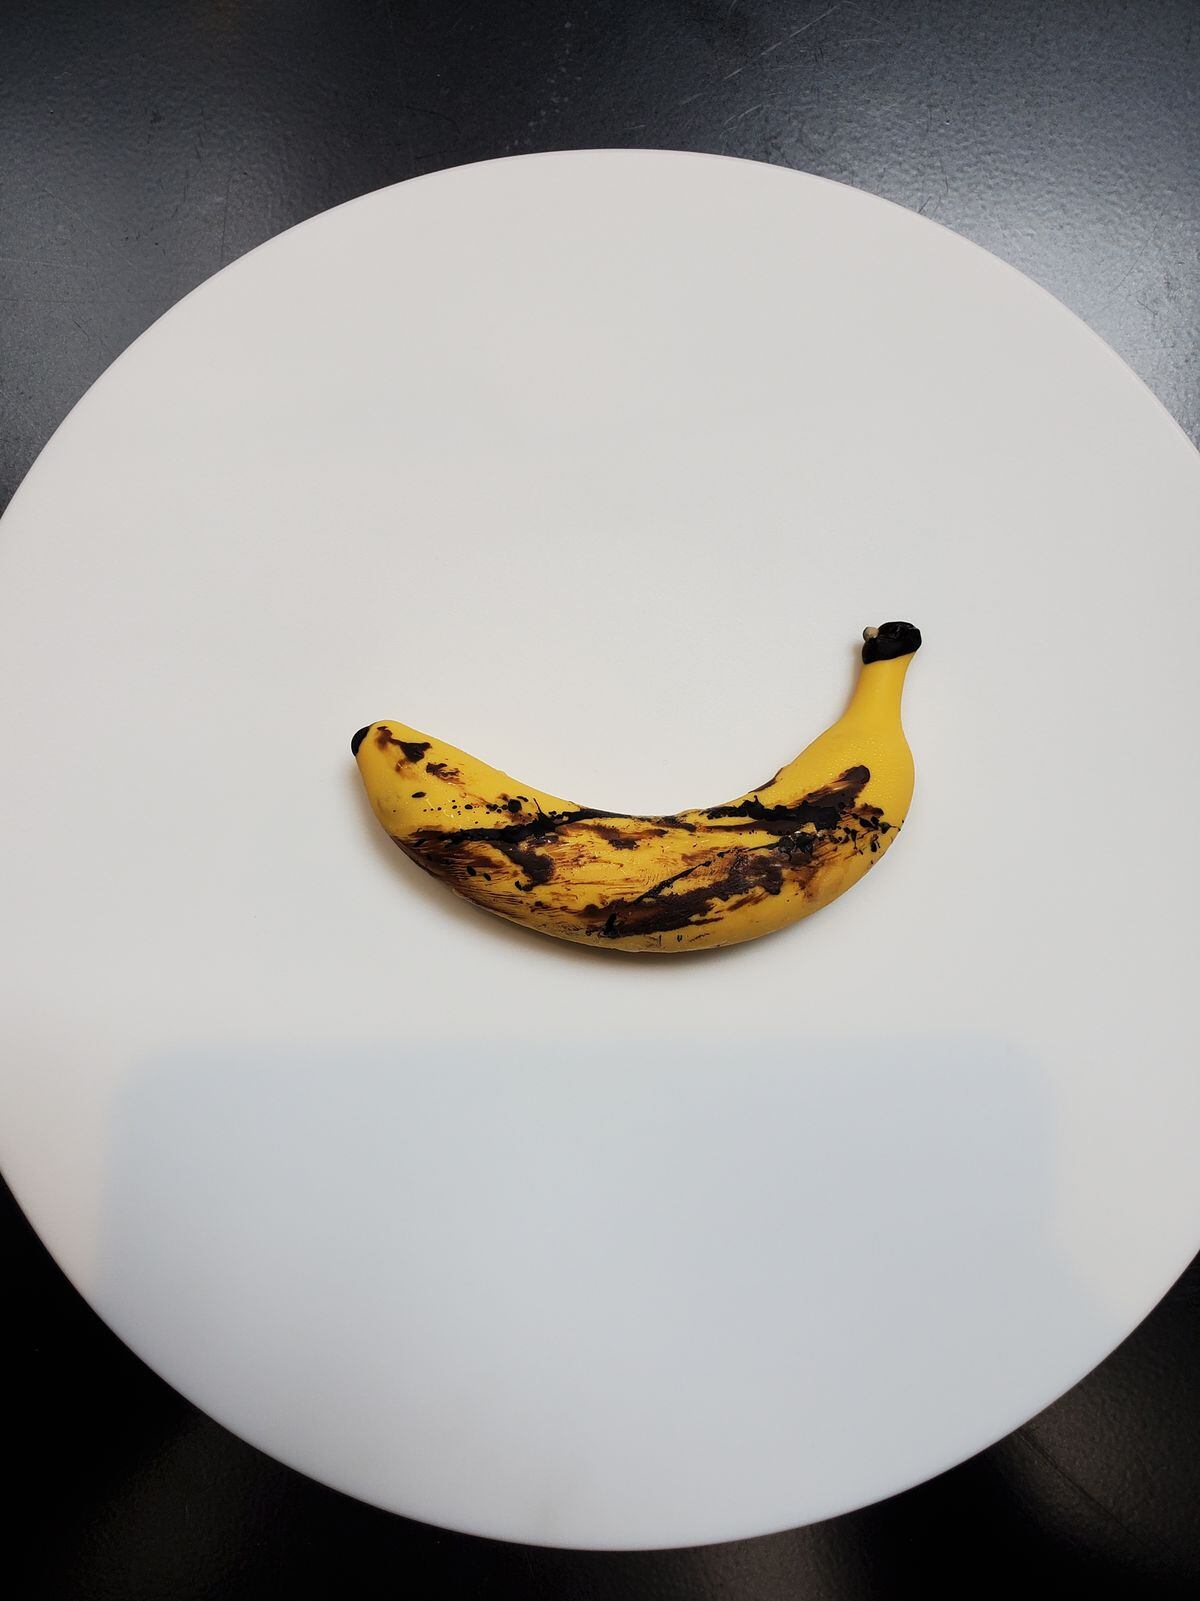 Banana - paying homage to Velvet Underground